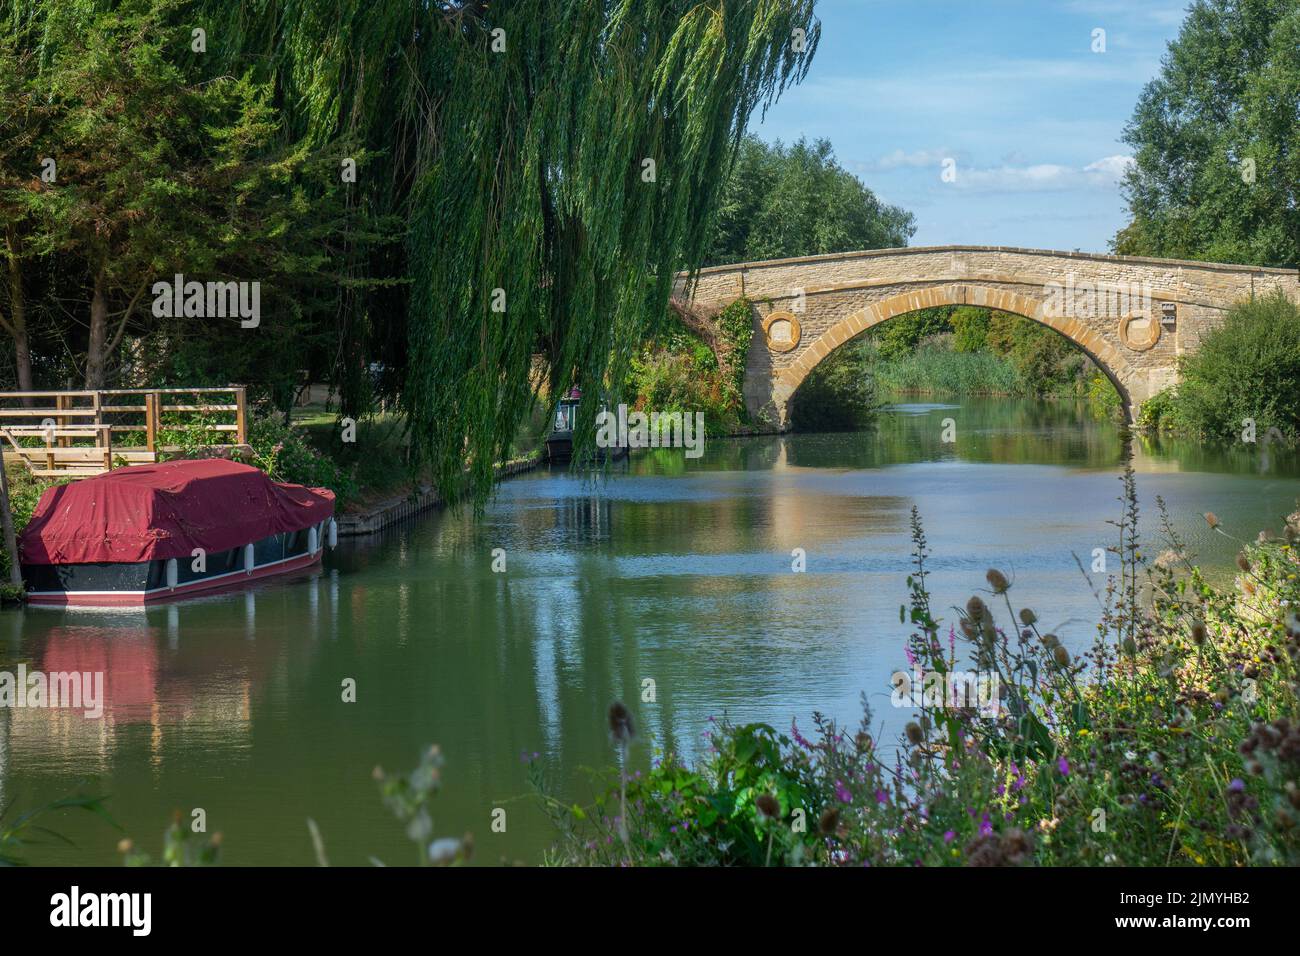 England, Oxfordshire, Tadpole bridge & river Thames Stock Photo